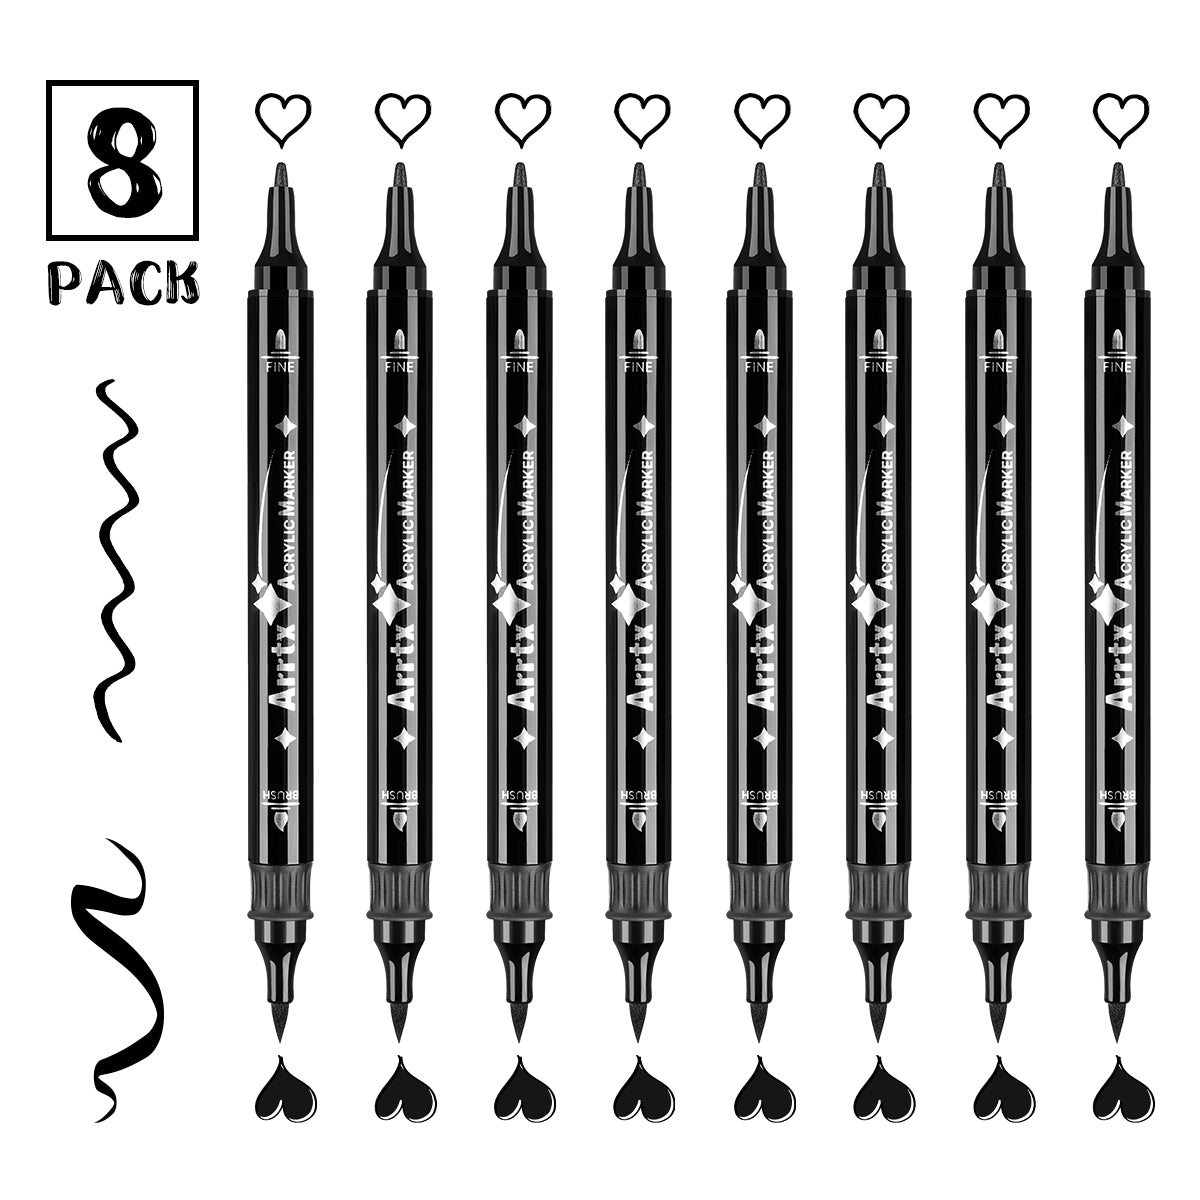  Arrtx Acrylic Paint Pens, 62 Colors Brush Tip and Fine